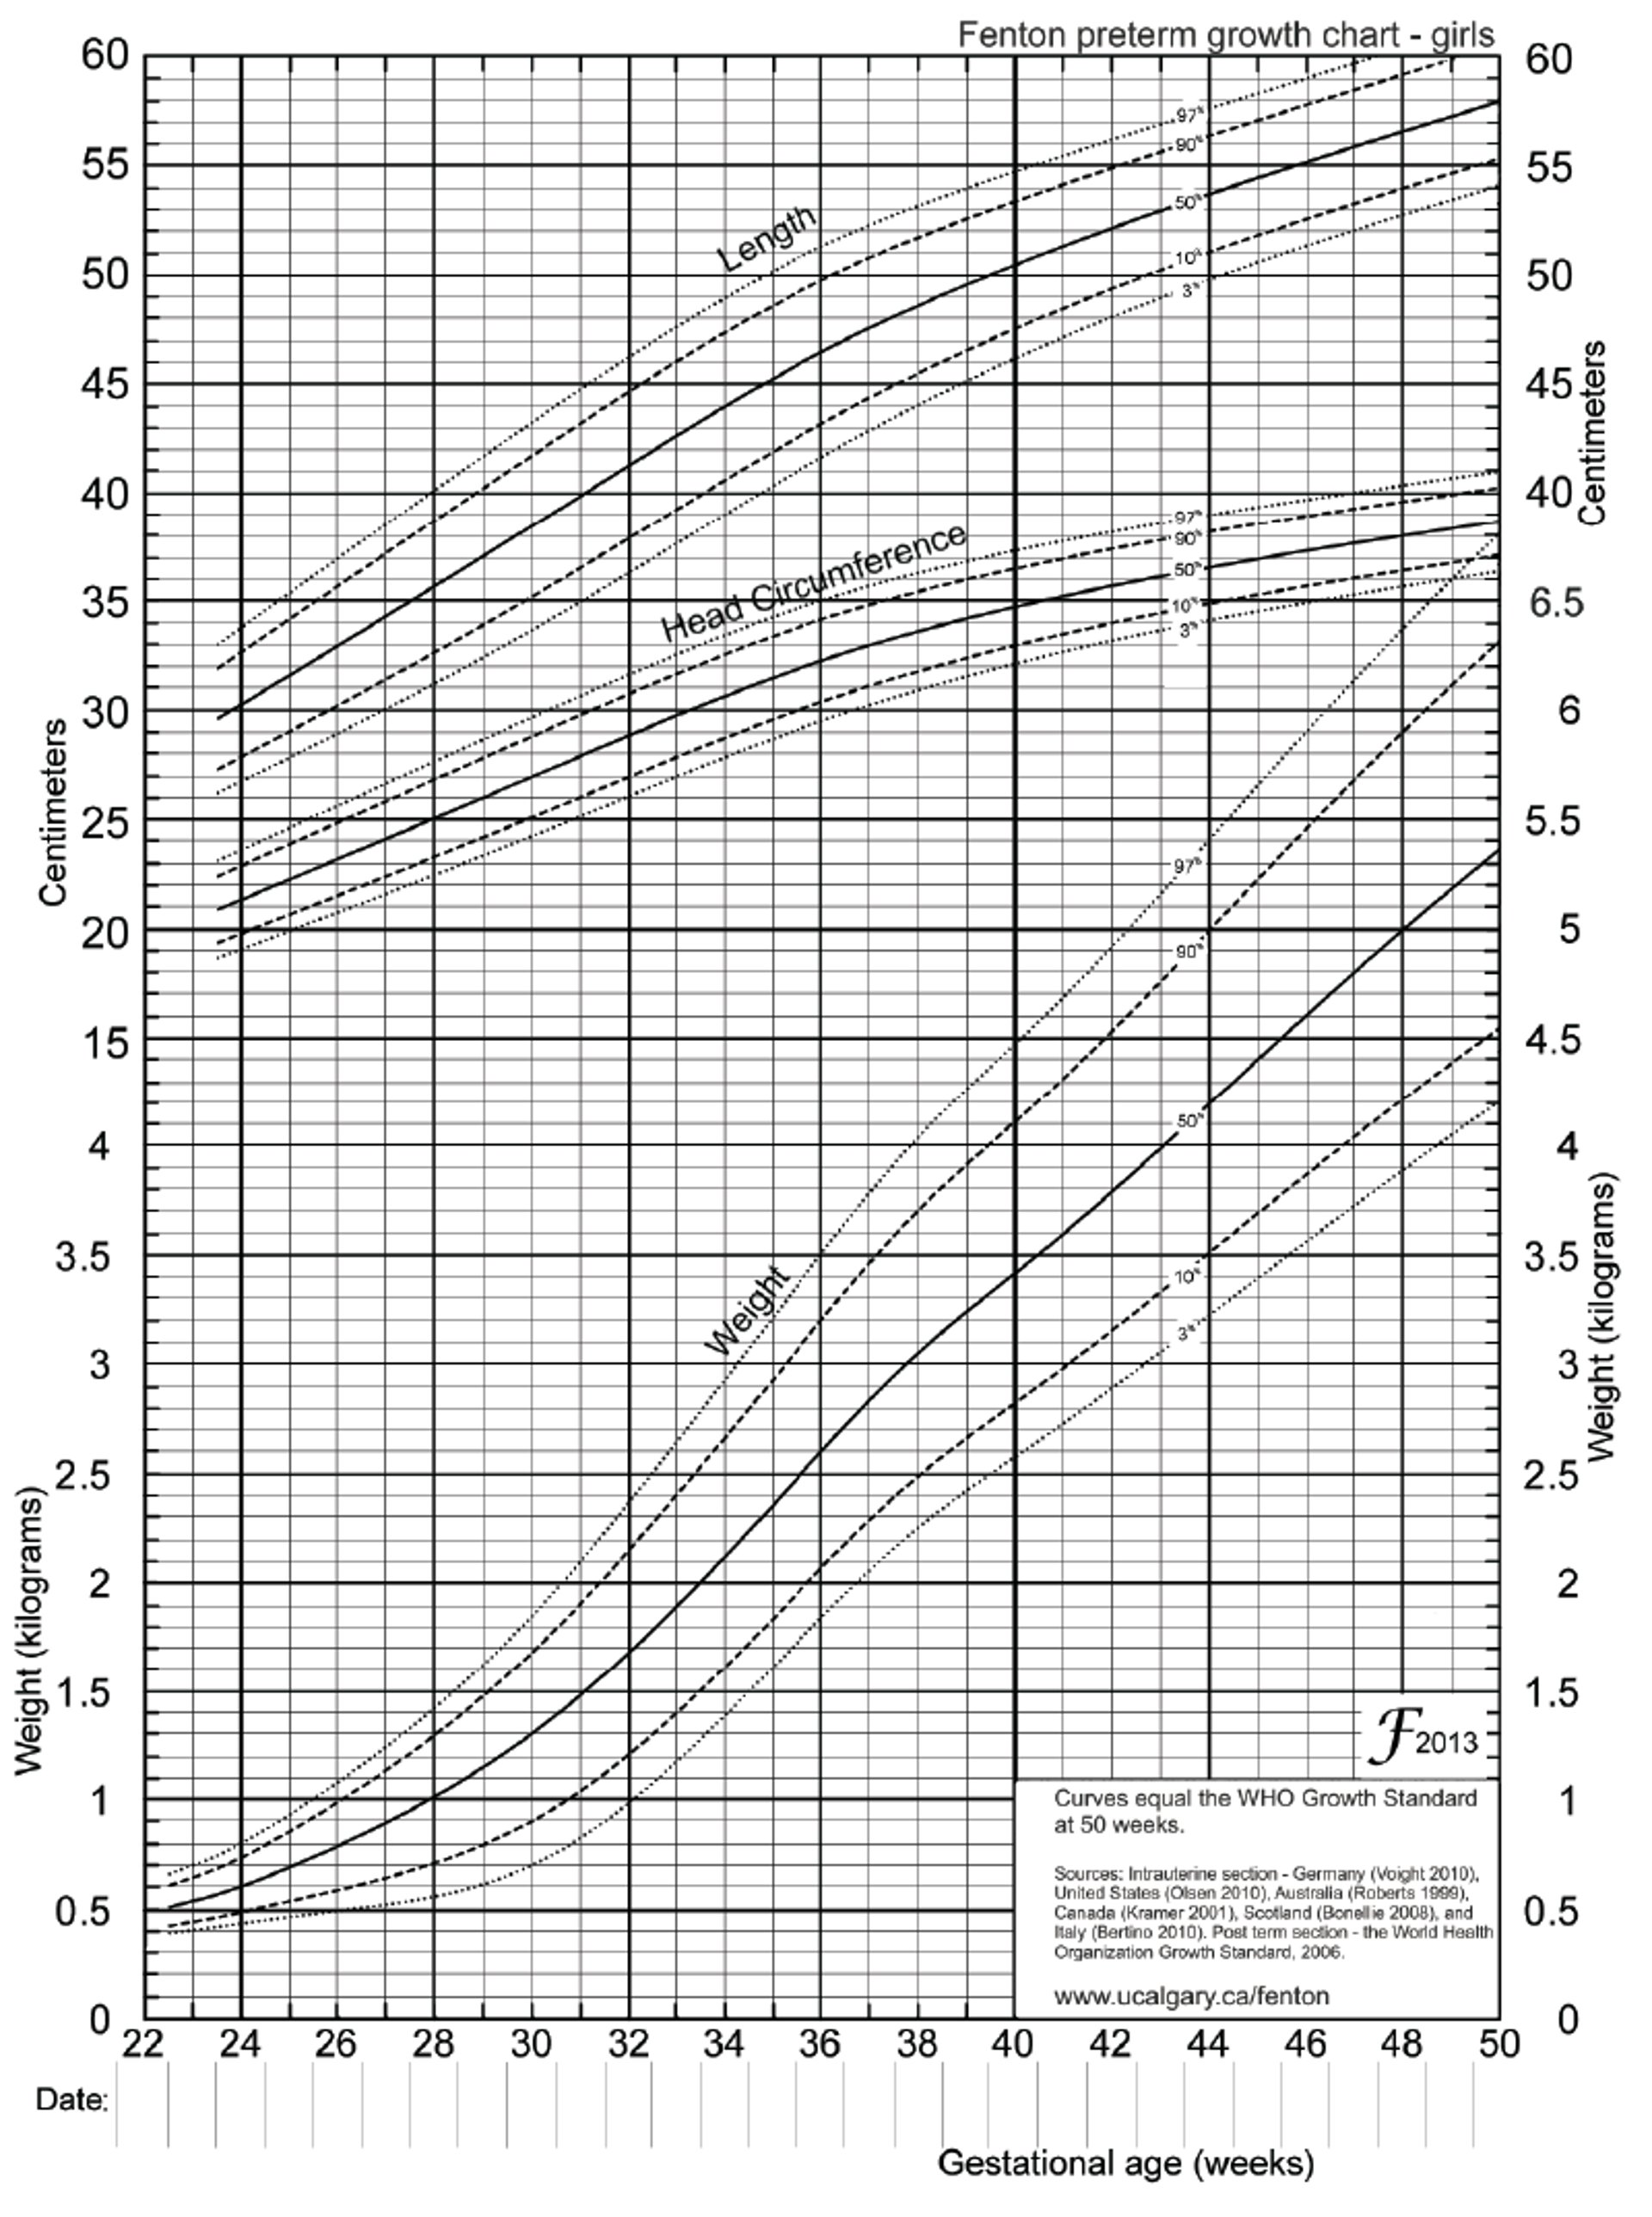 Fenton Growth Chart for Preterm Girls